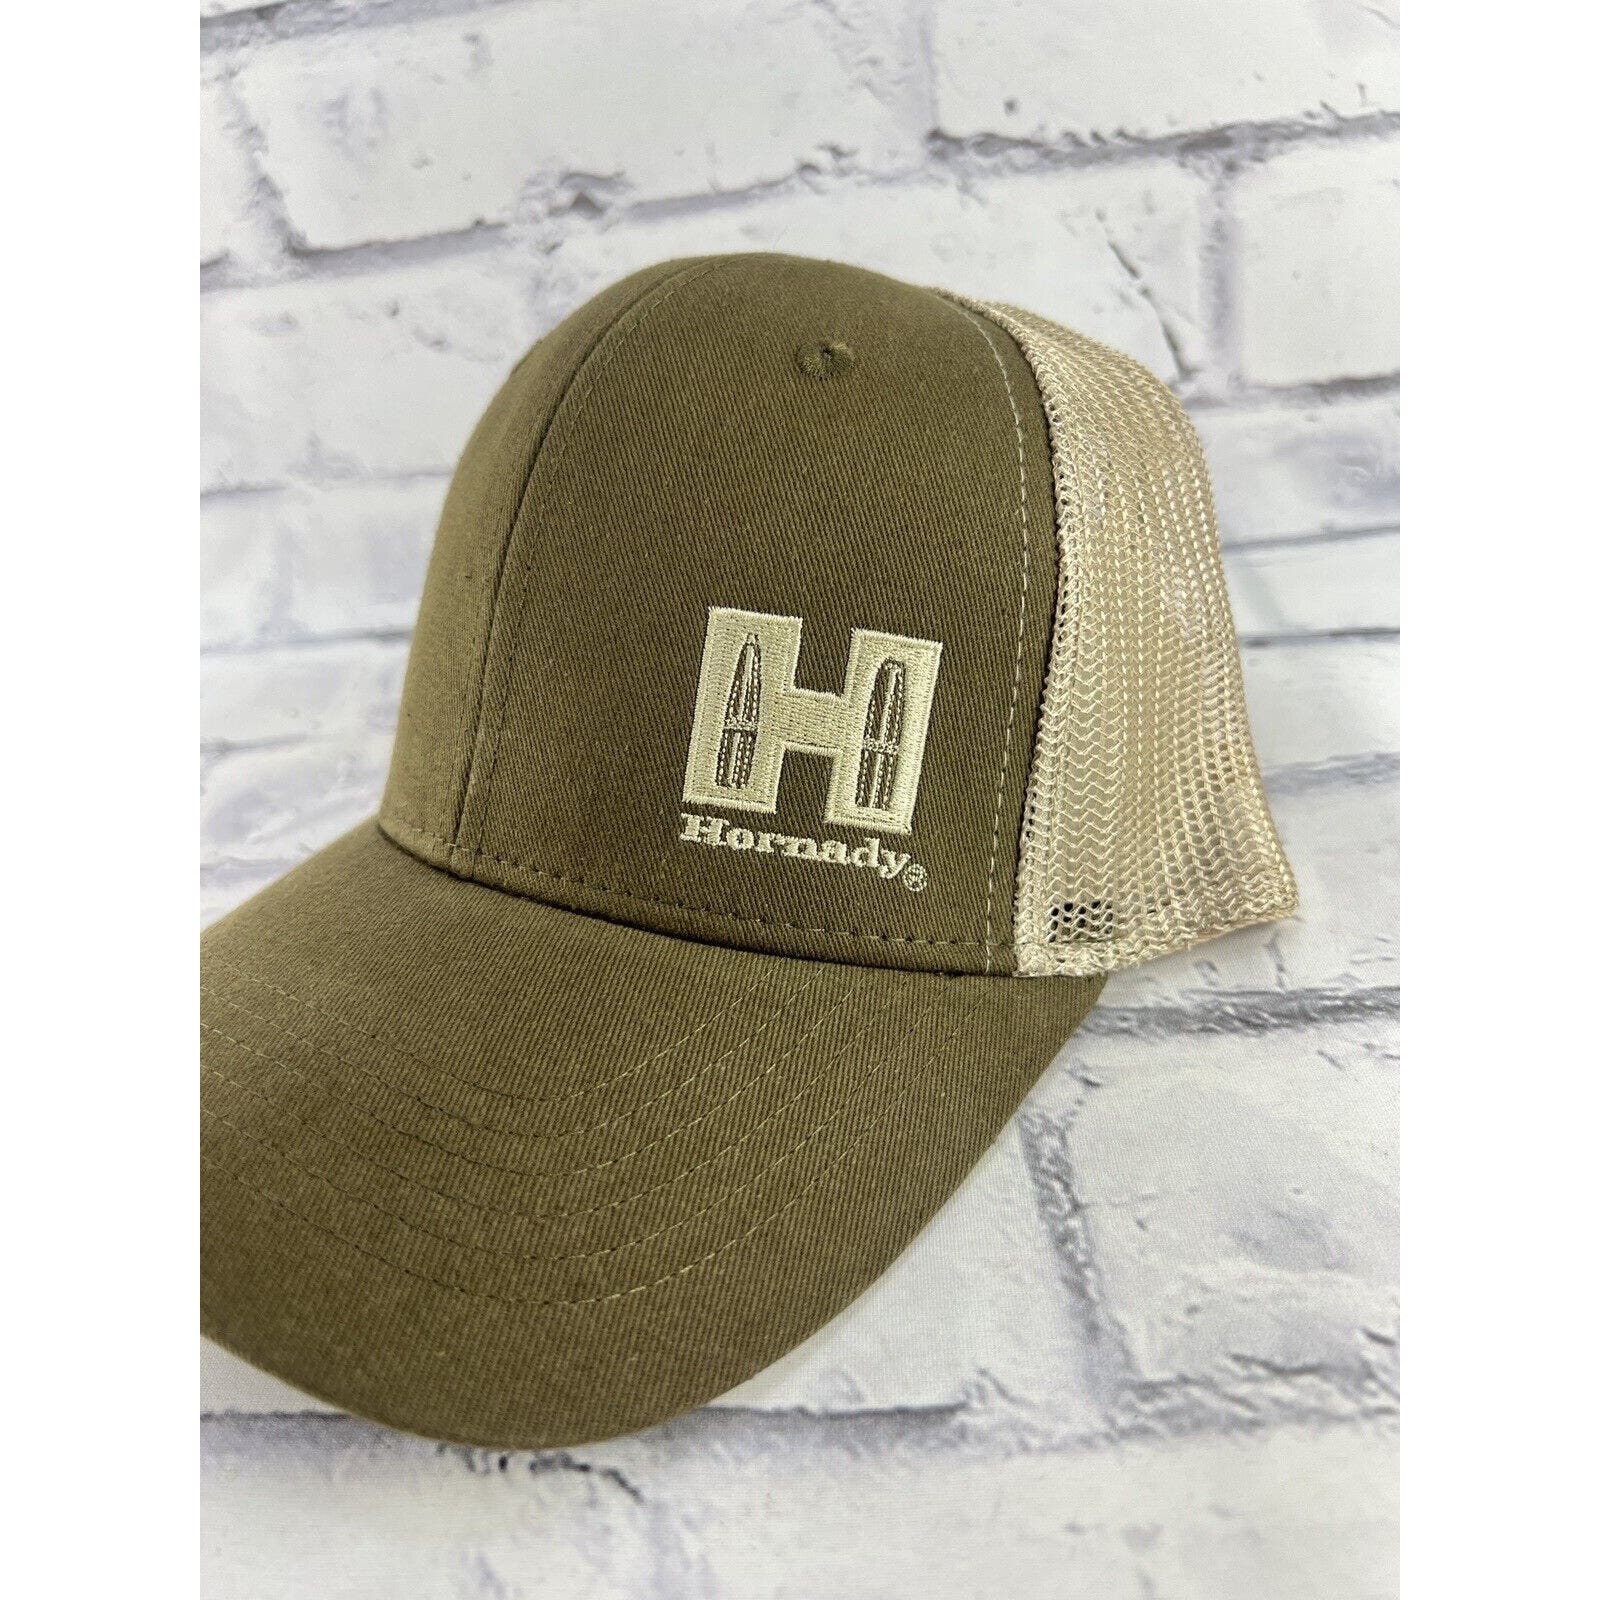 Hornady Baseball Trucker Hat Olive Green Tan Mesh Back Adjustable